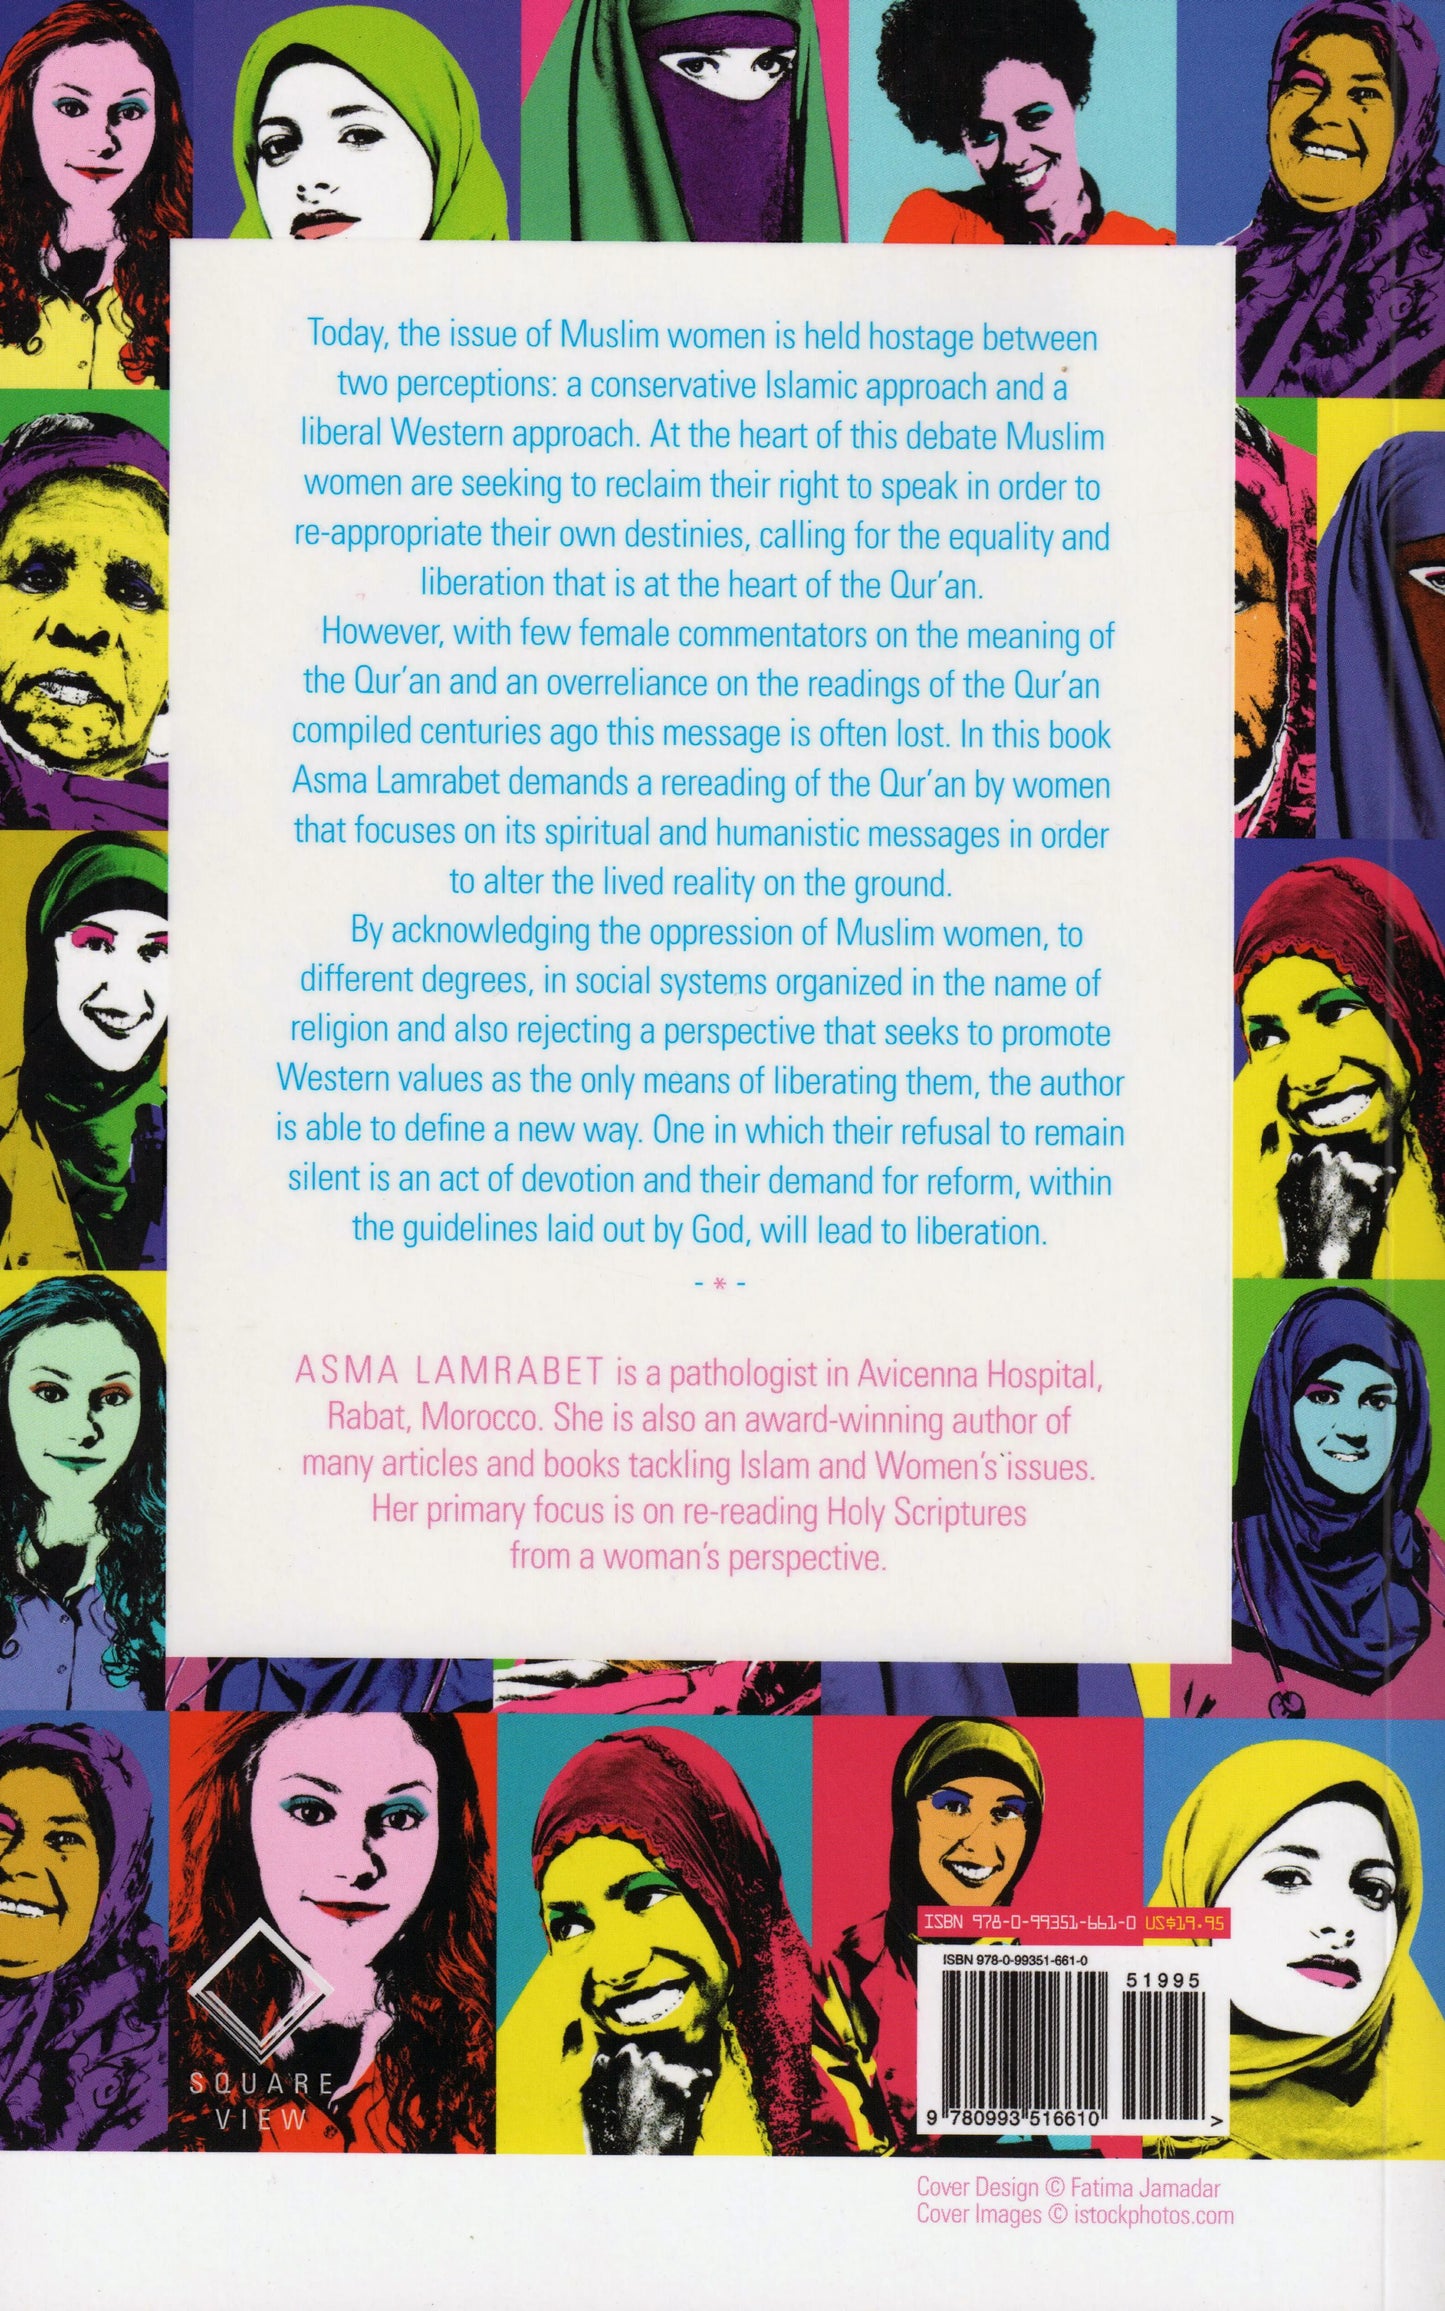 Women in the Qur’an: An Emancipatory Reading